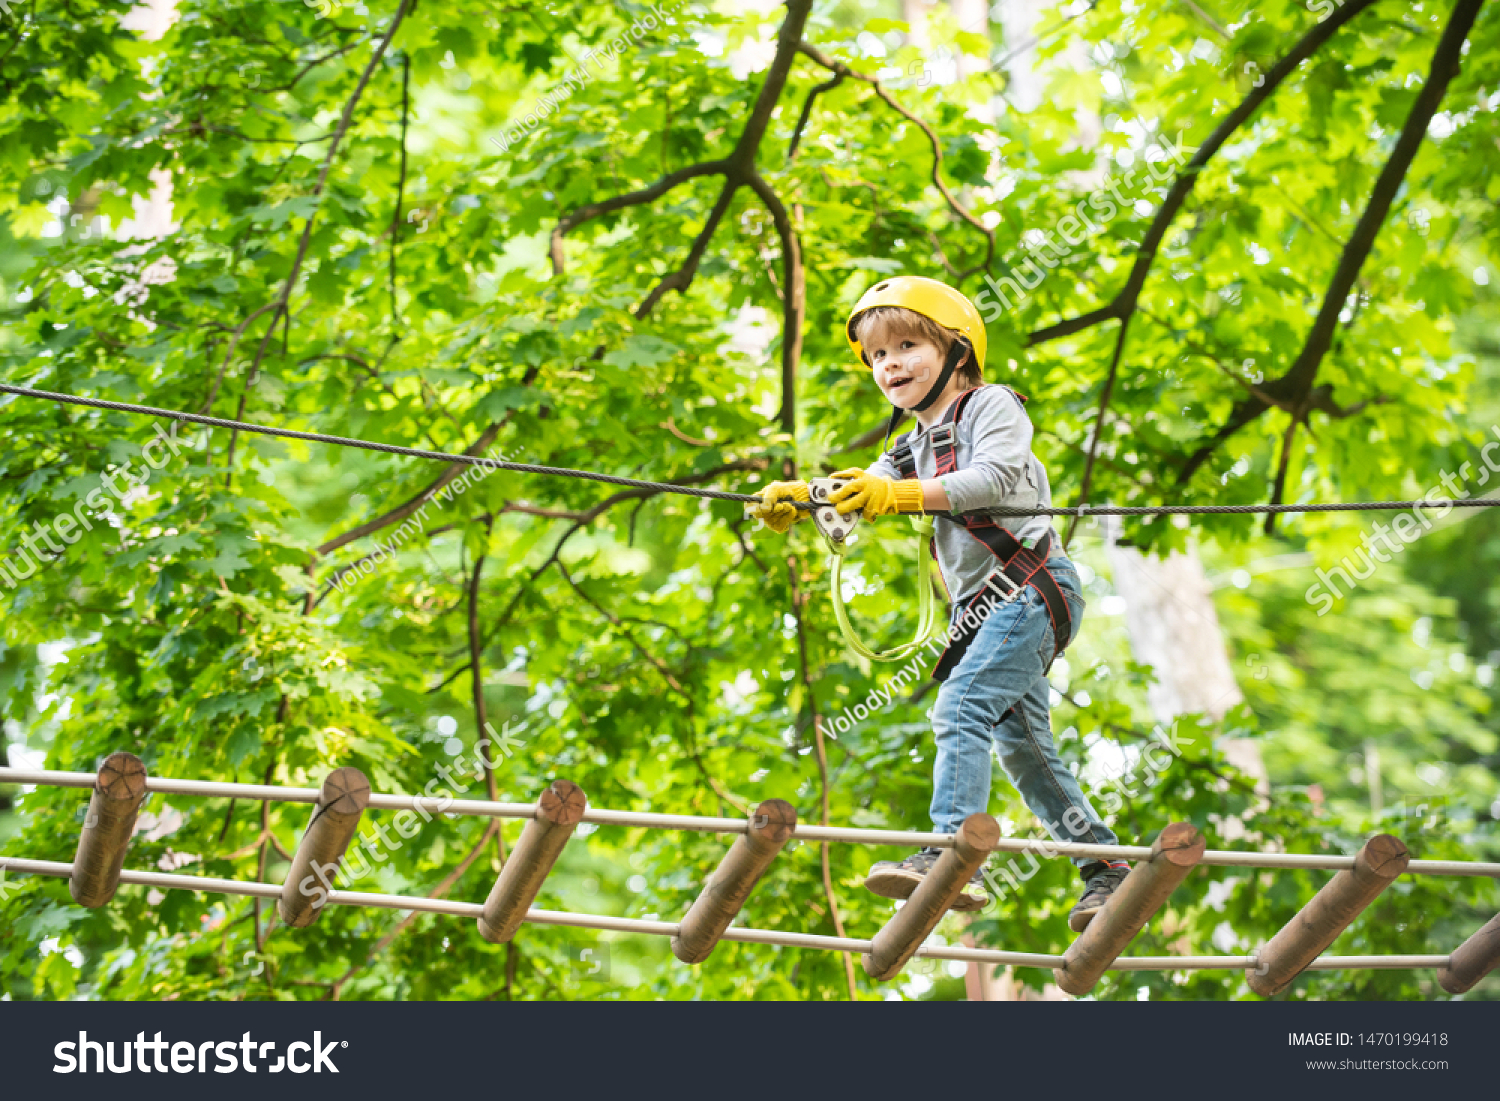 Rope park - climbing center. Child boy having fun at adventure park. Go Ape Adventure. Child boy having fun at adventure park. #1470199418